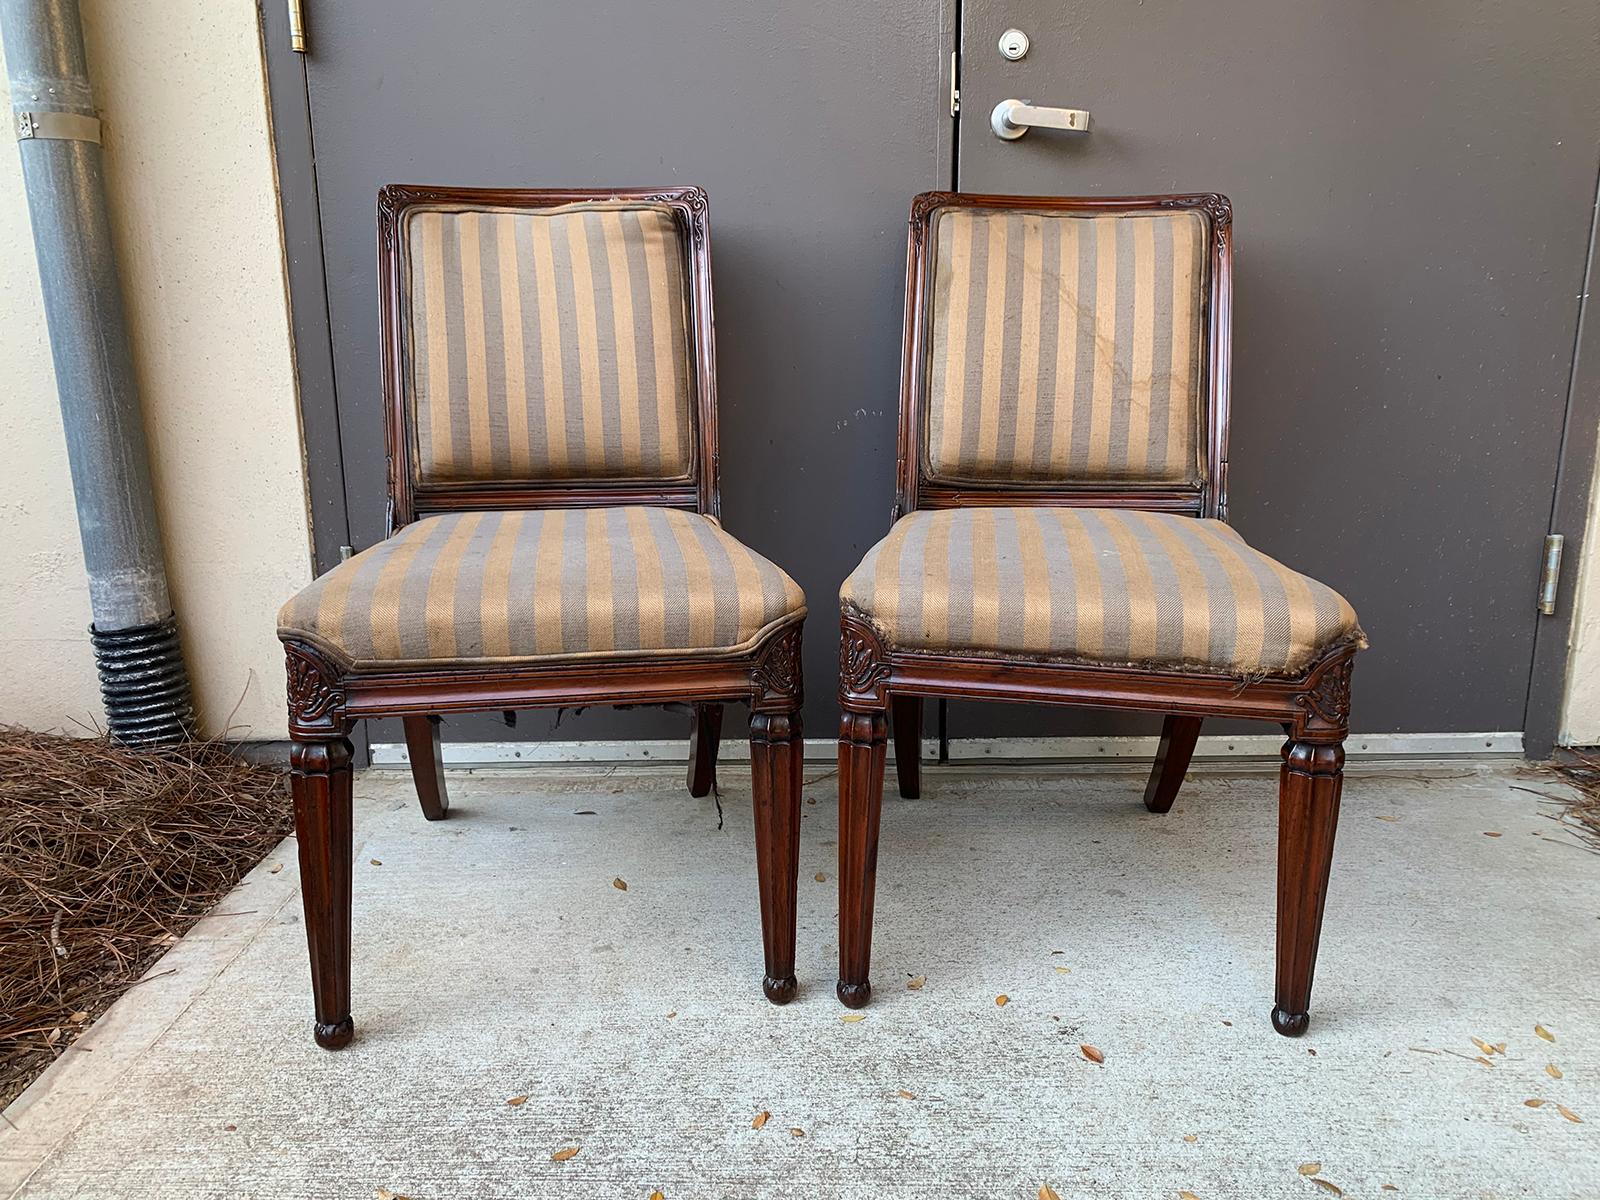 Pair of English Regency side chairs, circa 1800.